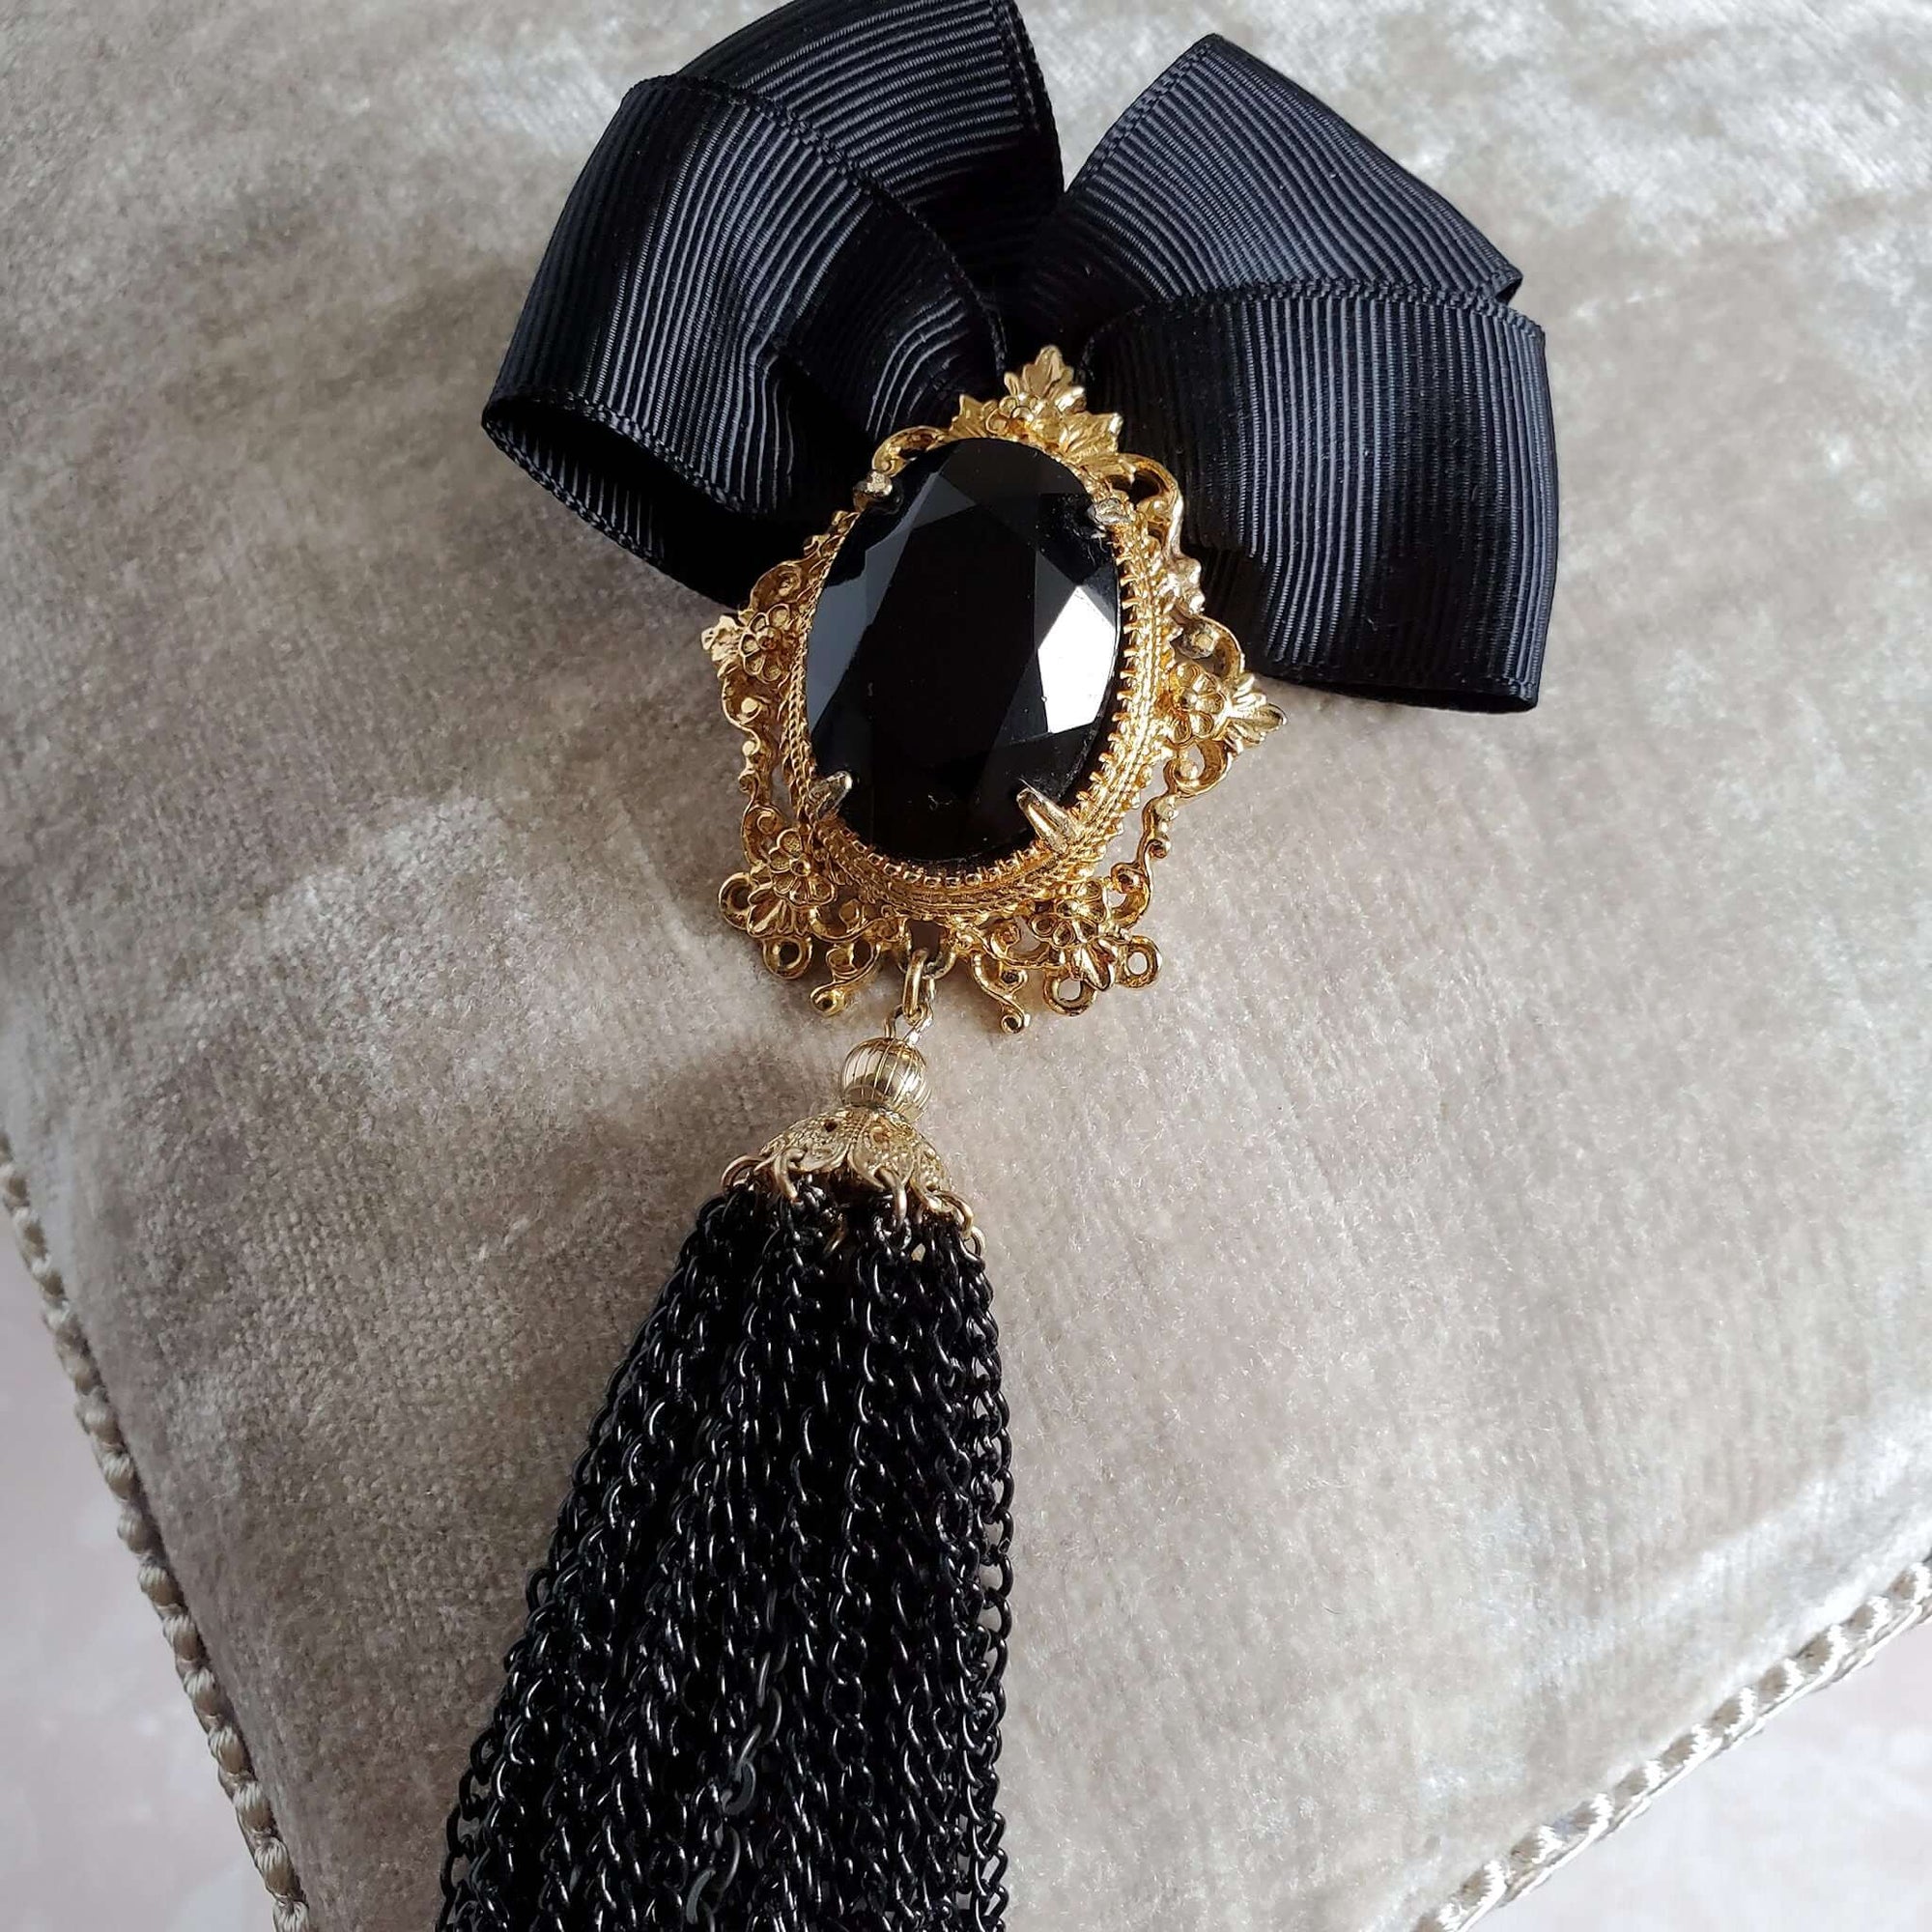 Designer black and gold, Victorian inspired brooch.